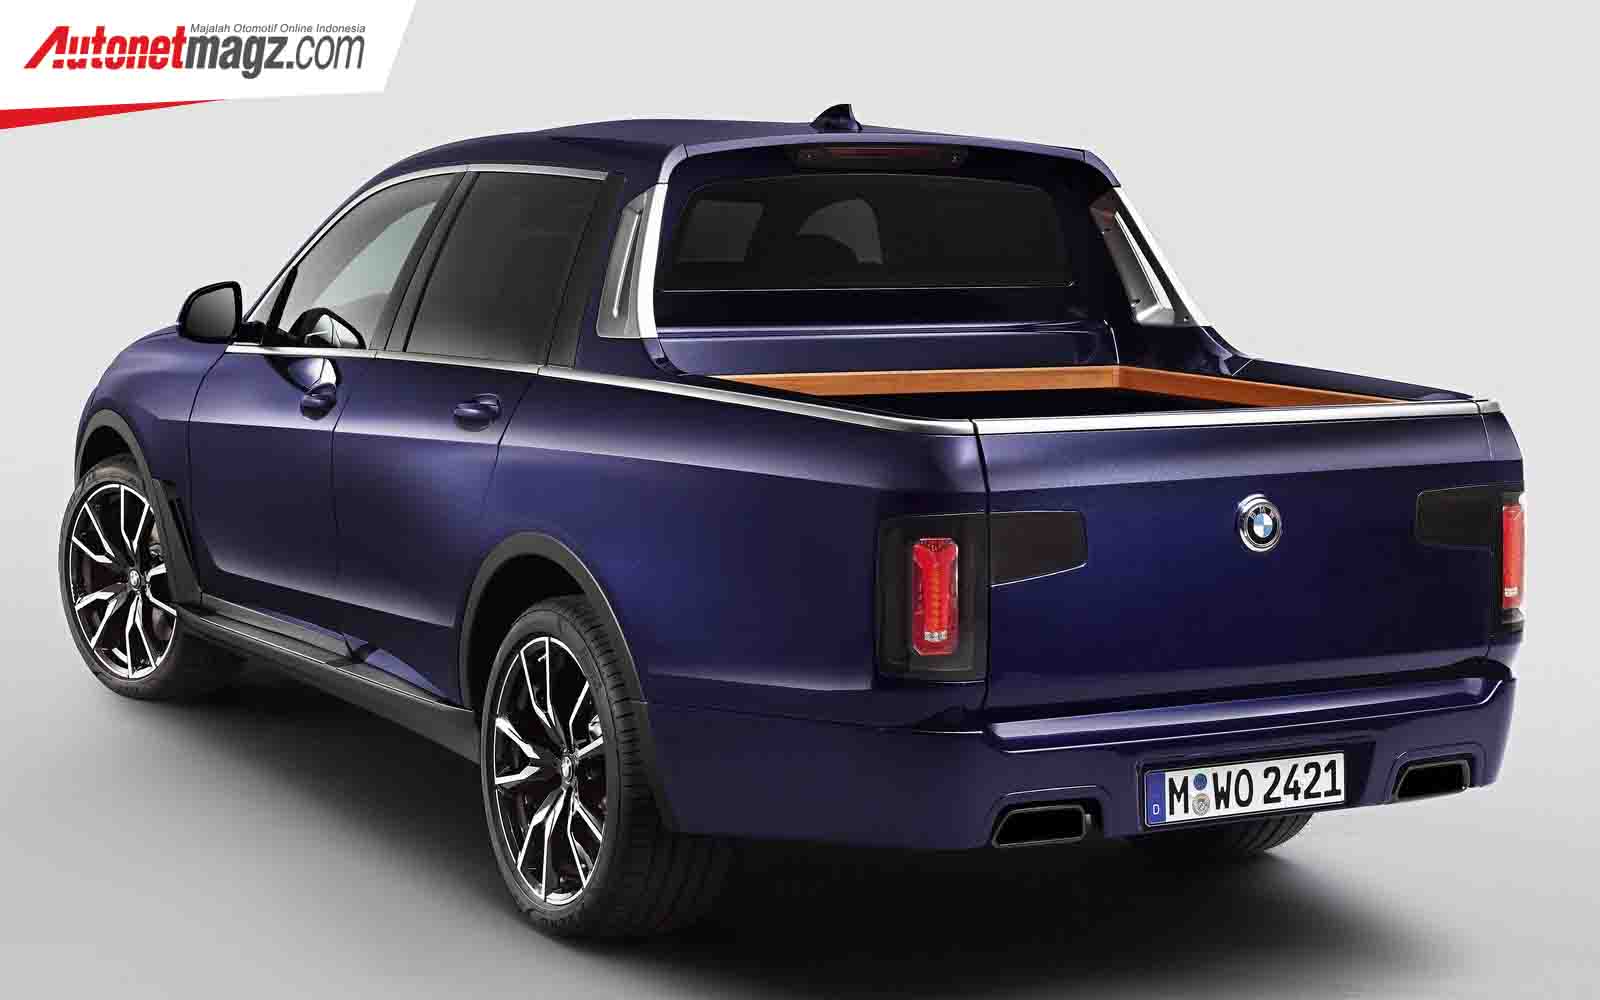 Berita, Fitur BMW X7 Pickup Concept: BMW X7 Pick-up Concept : Bisa Bawa Motor Di Bak belakang!